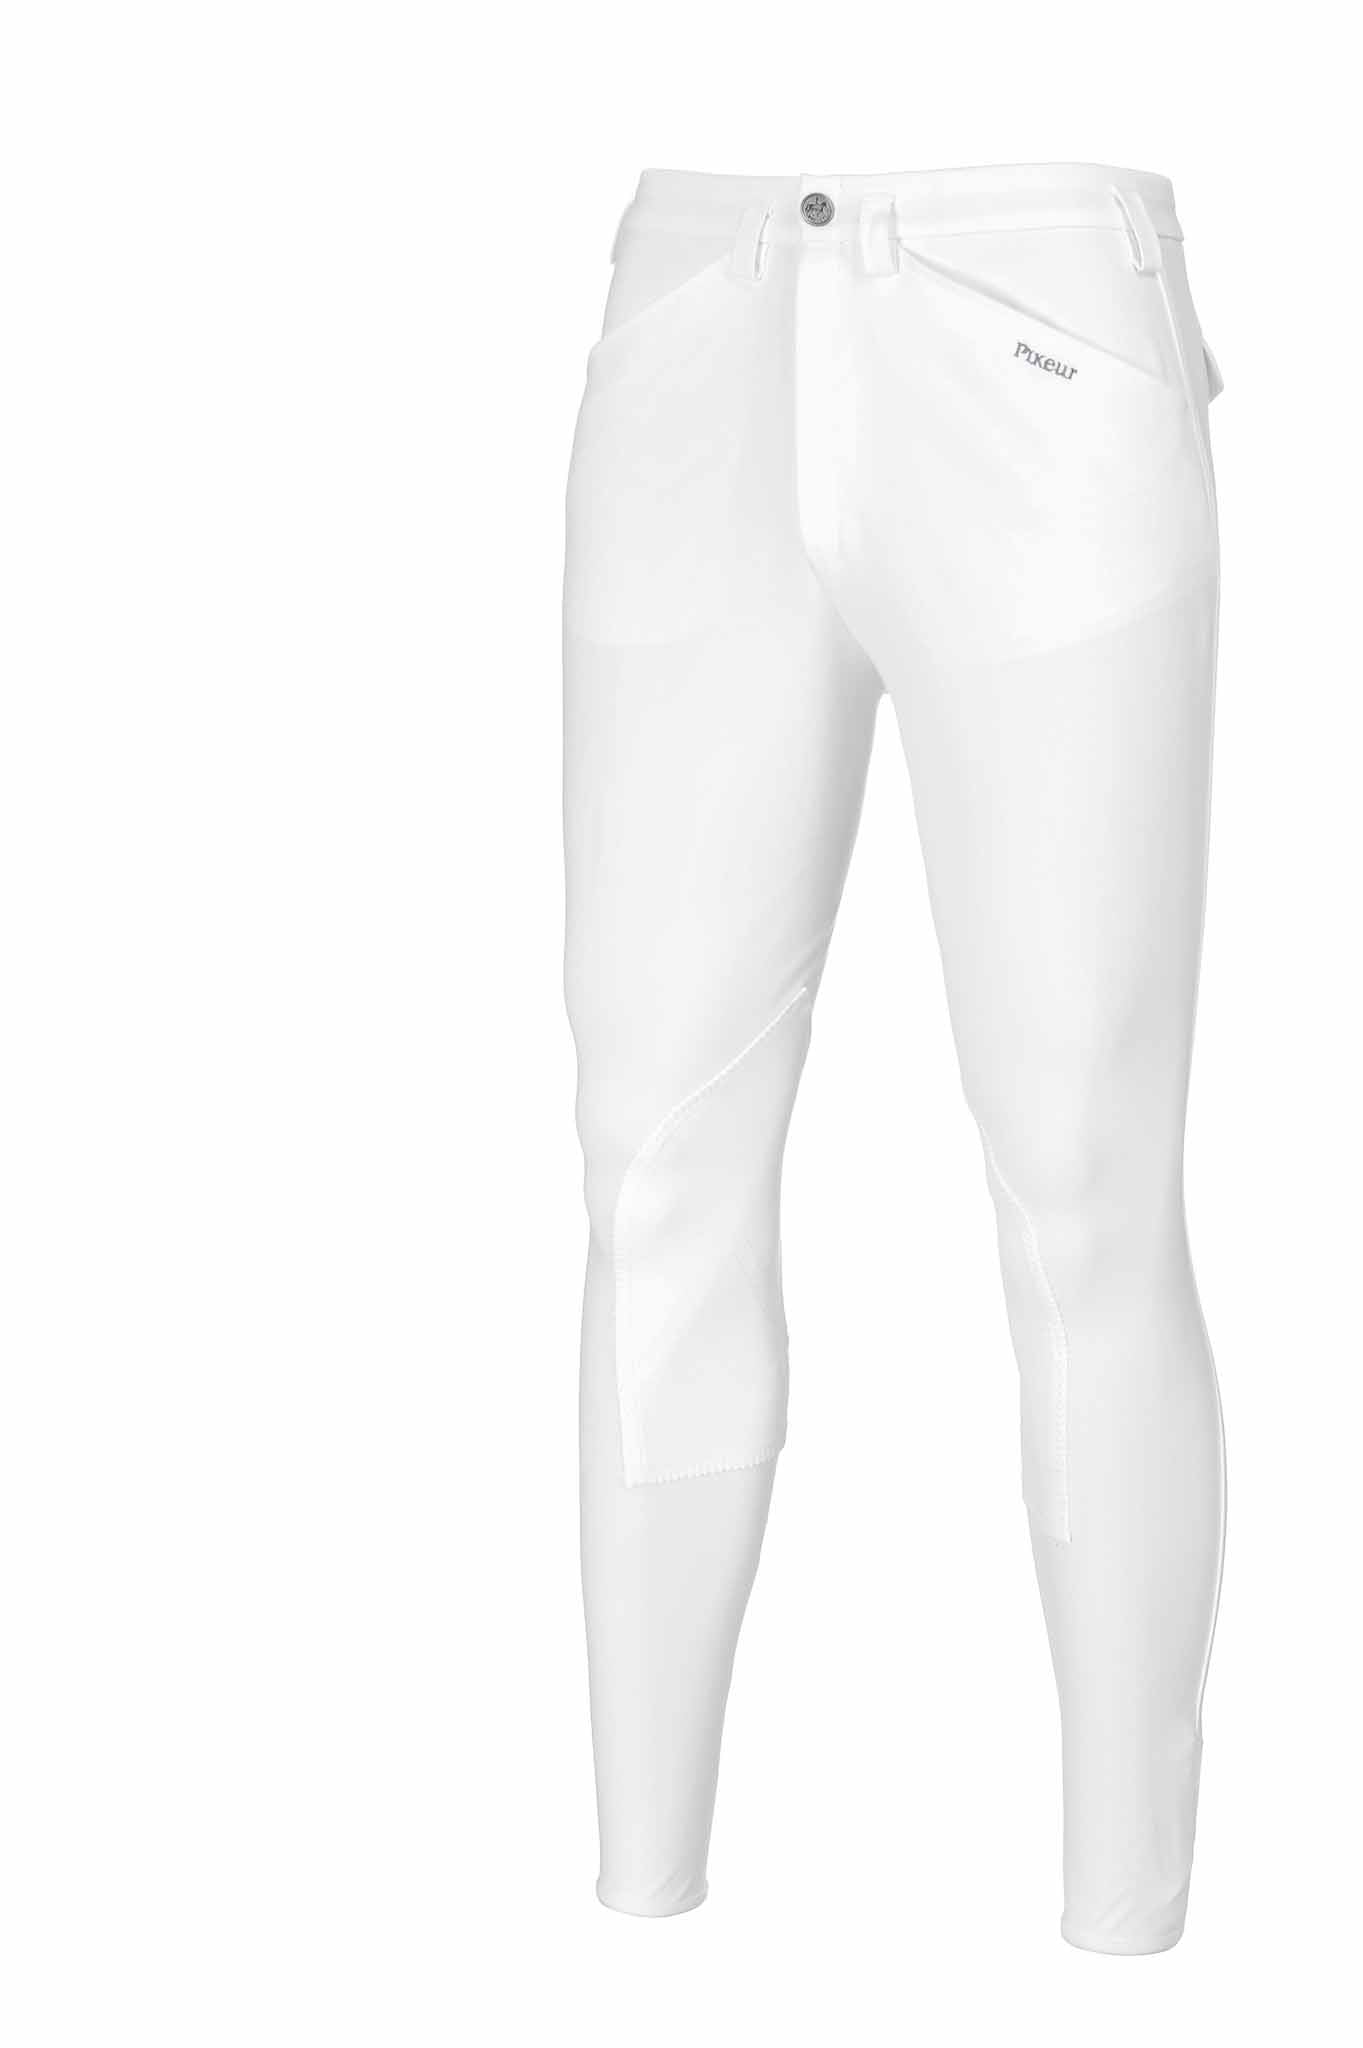 Pantalon d'équitation, RODRIGO II knee-grip, blanc - Pikeur